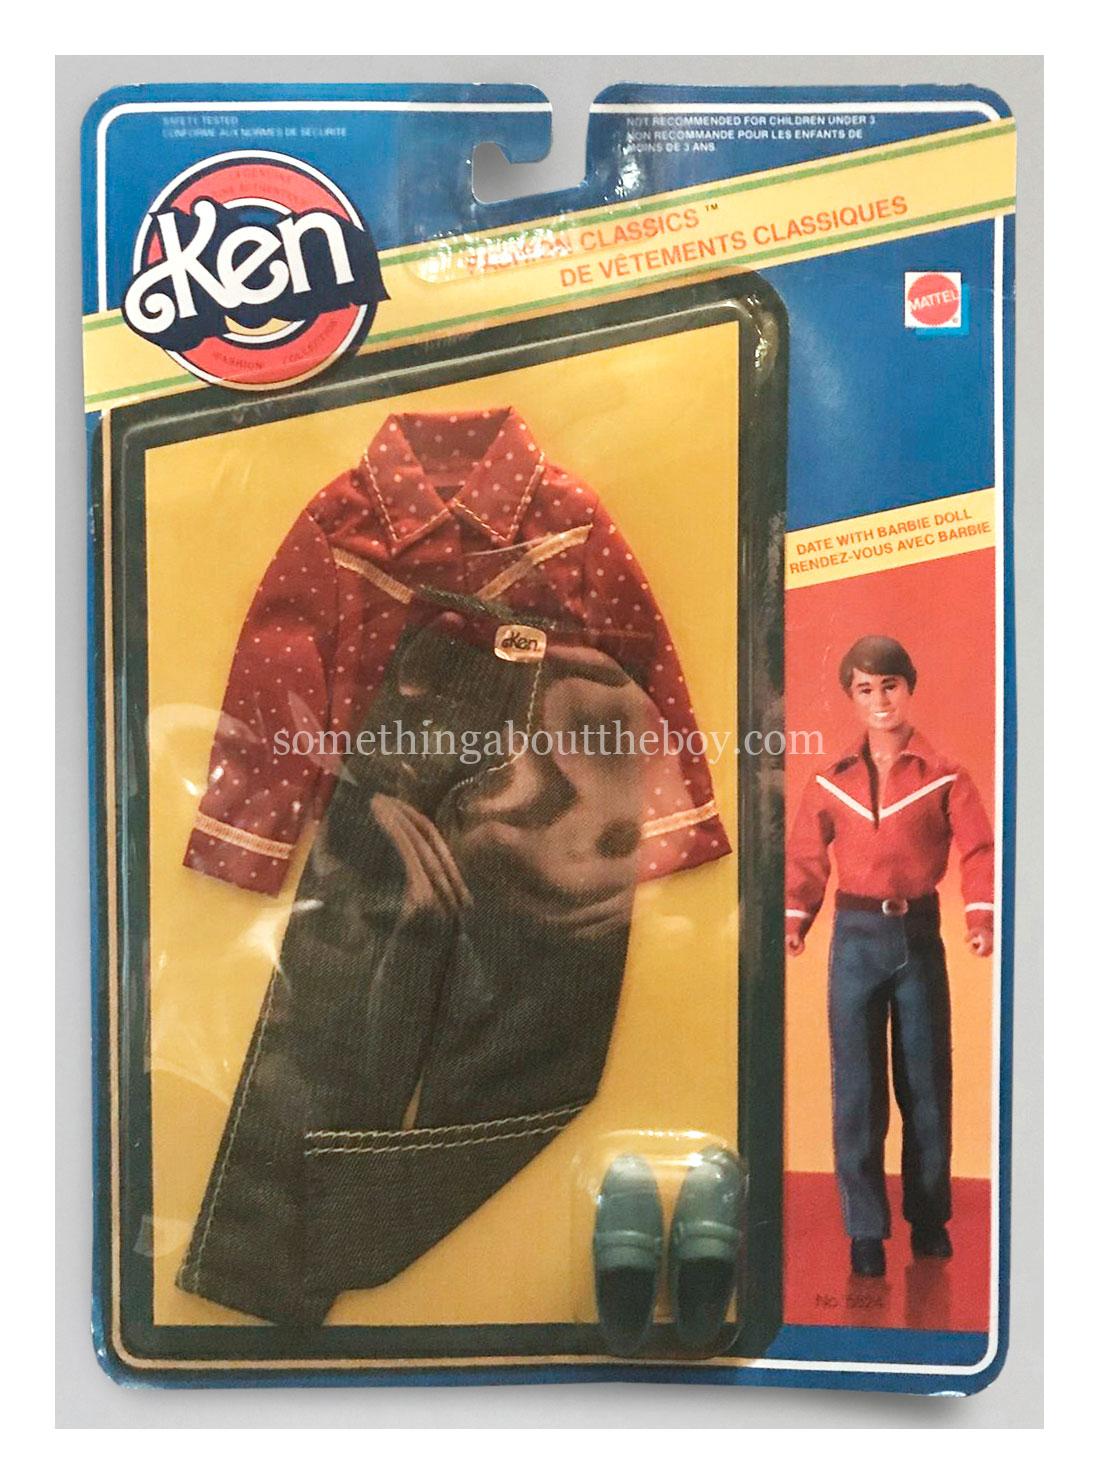 1983-84 Kmart Fashion Classics #5824 in original (Canadian) packaging